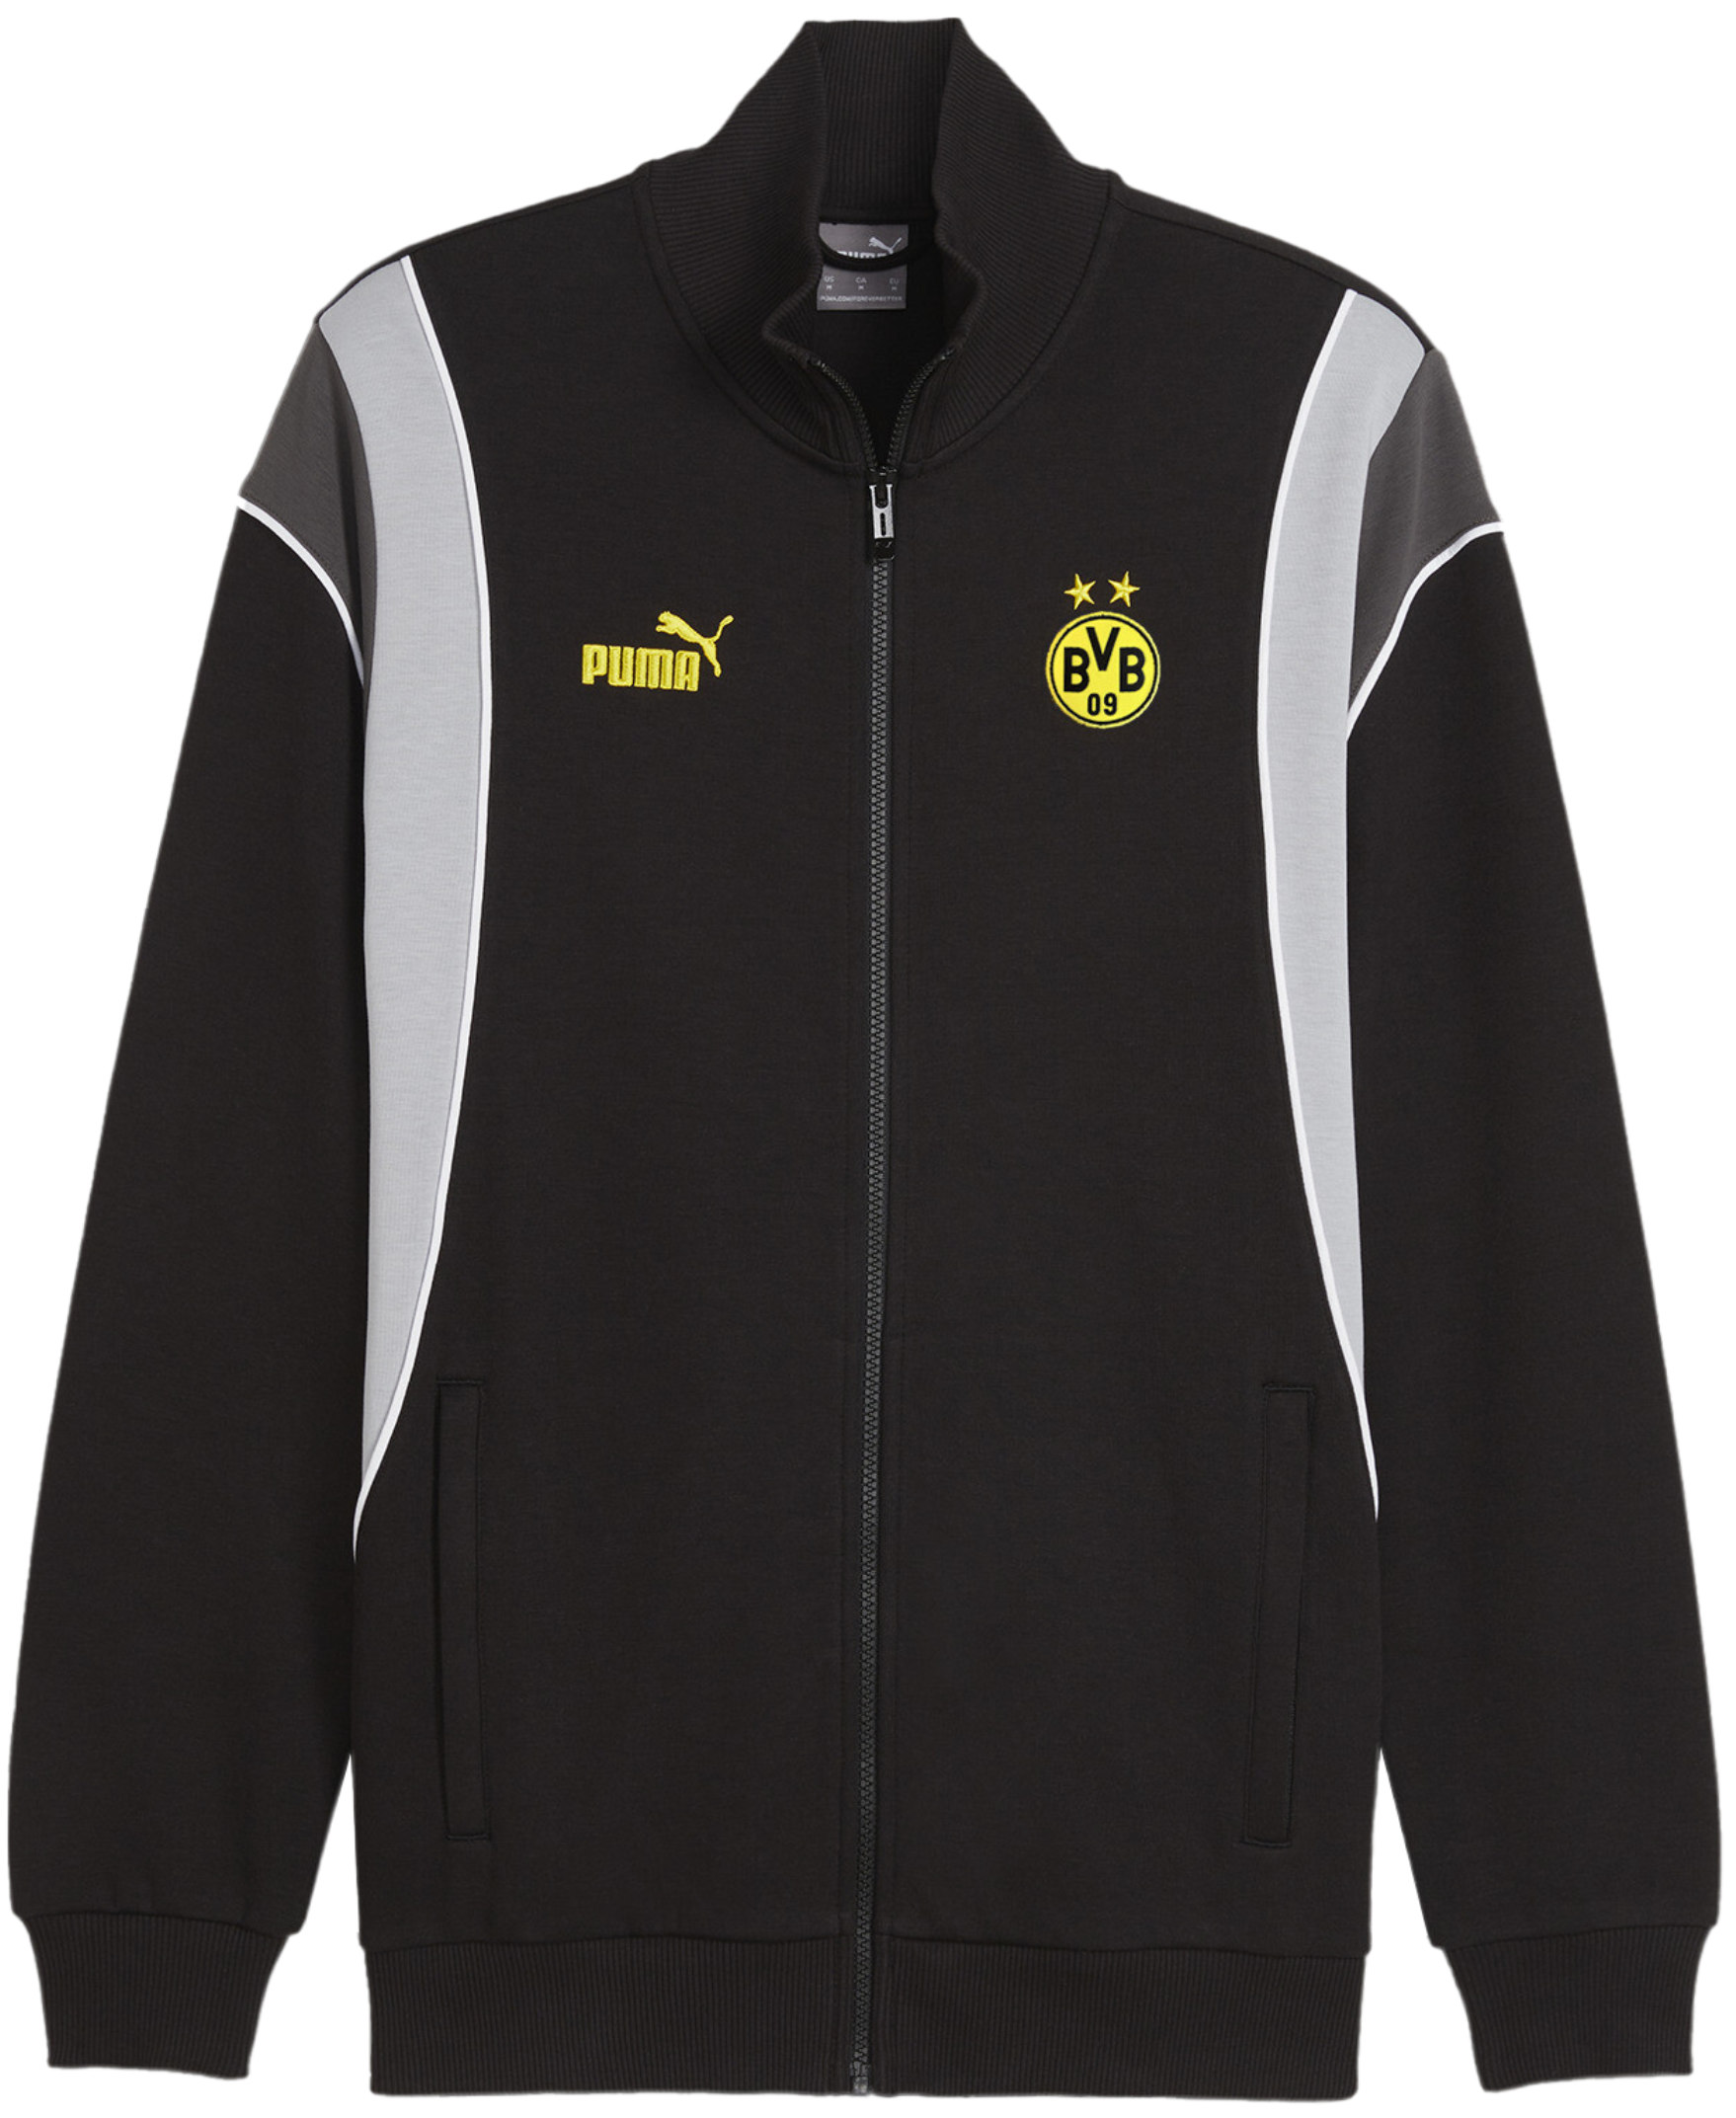 Jakna Puma BVB Dortmund Ftbl Archive Trainings jacket